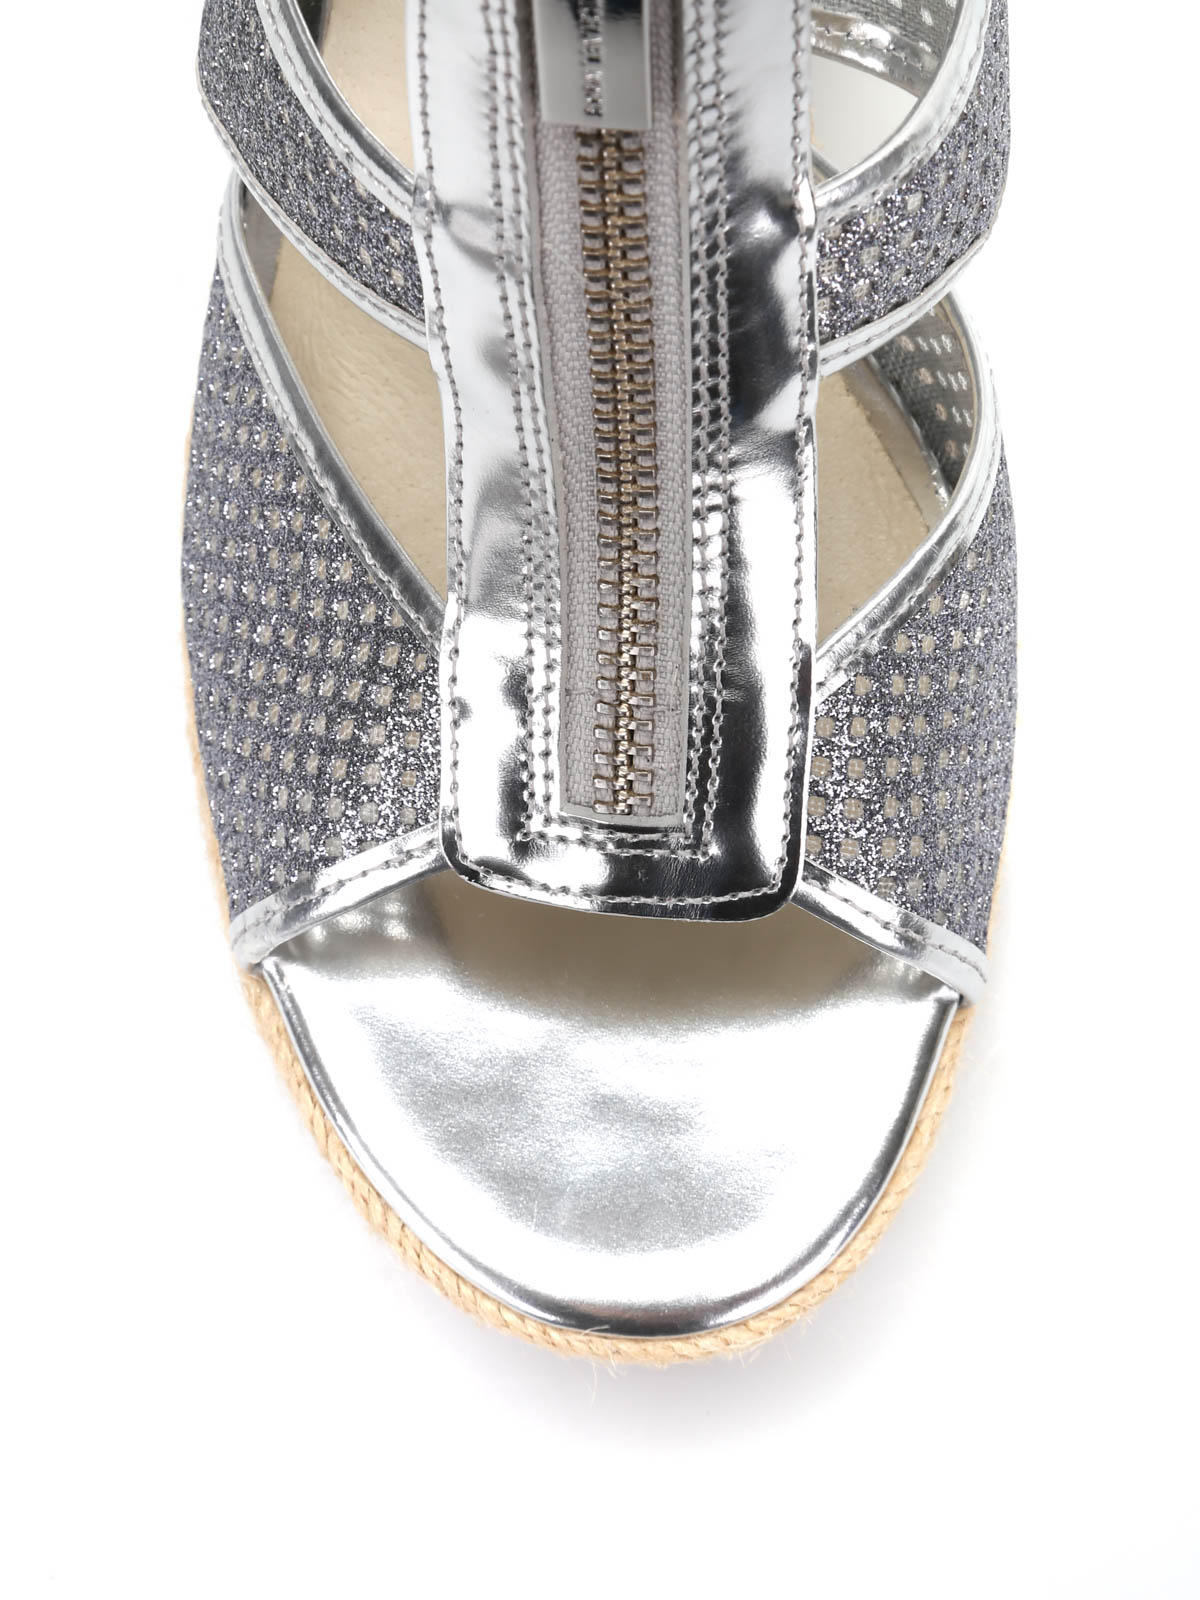 Sandals Michael Kors - Damita wedge sandals - 40R6DMMS1DSILVER | iKRIX.com